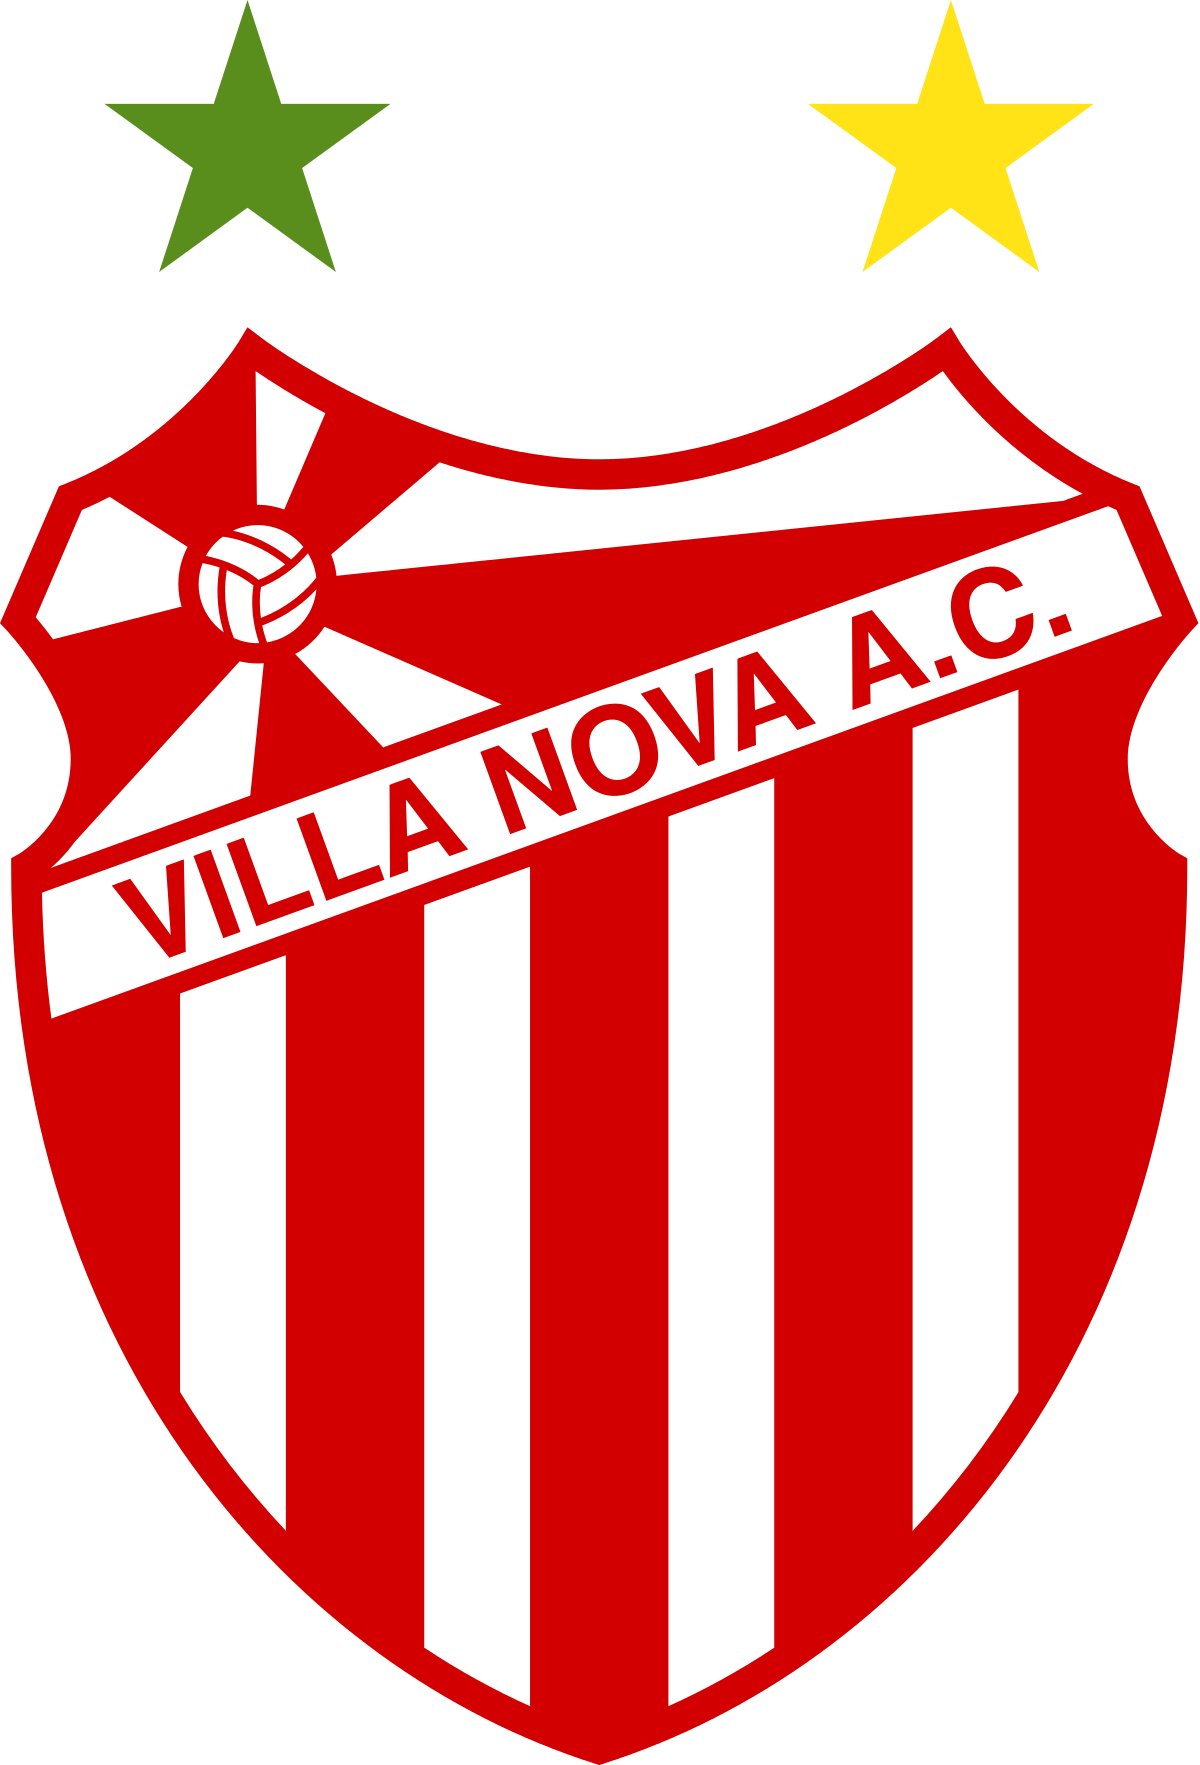 Villa Nova MG logo